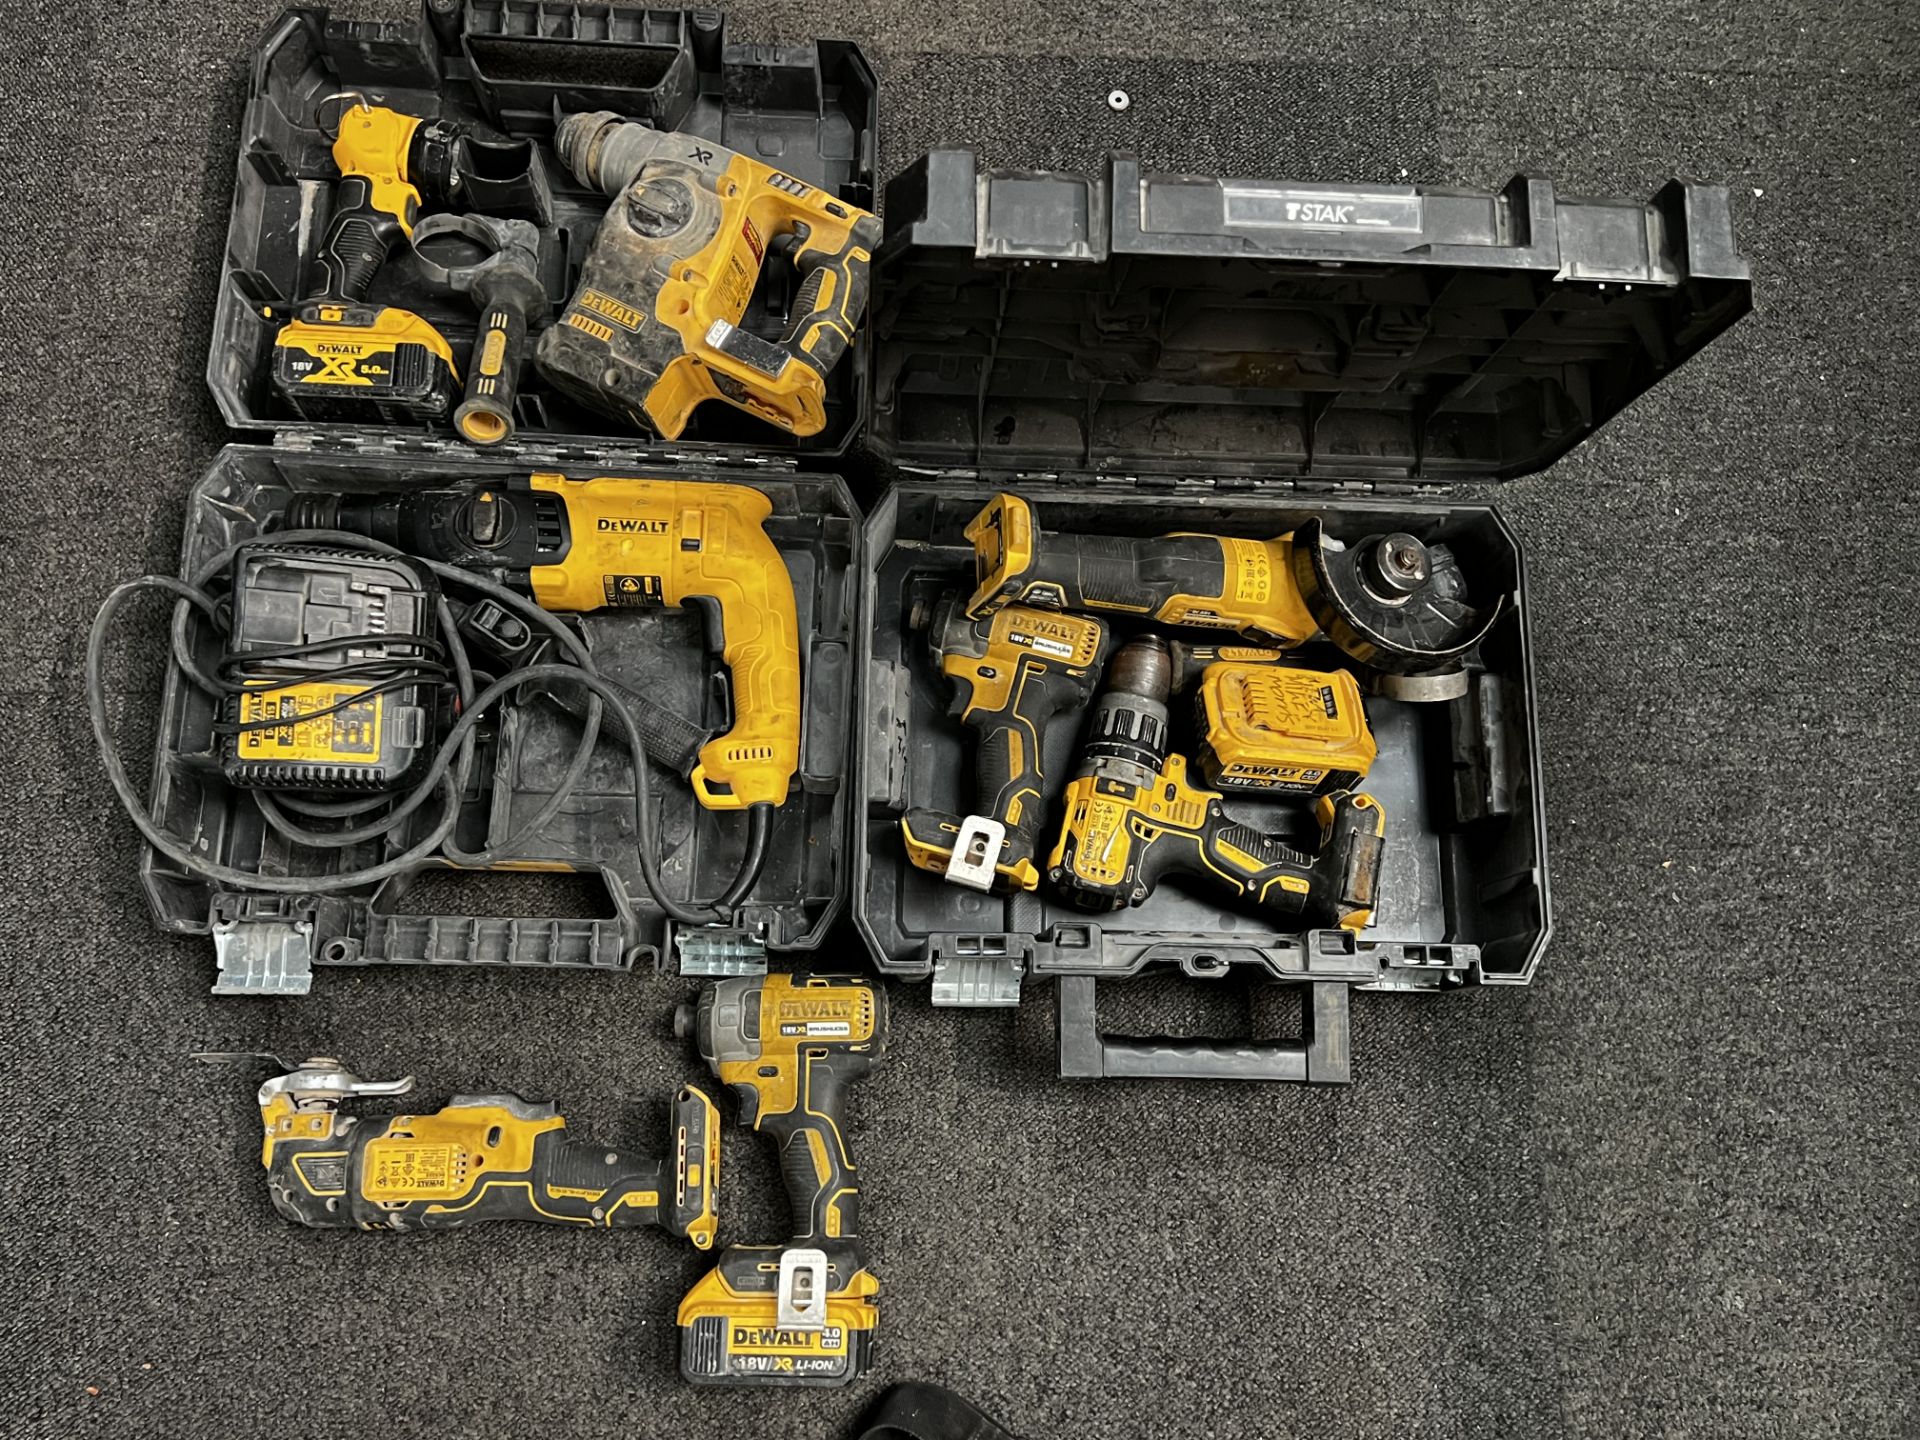 A quantity of DeWalt rechargeable power tools as per photos